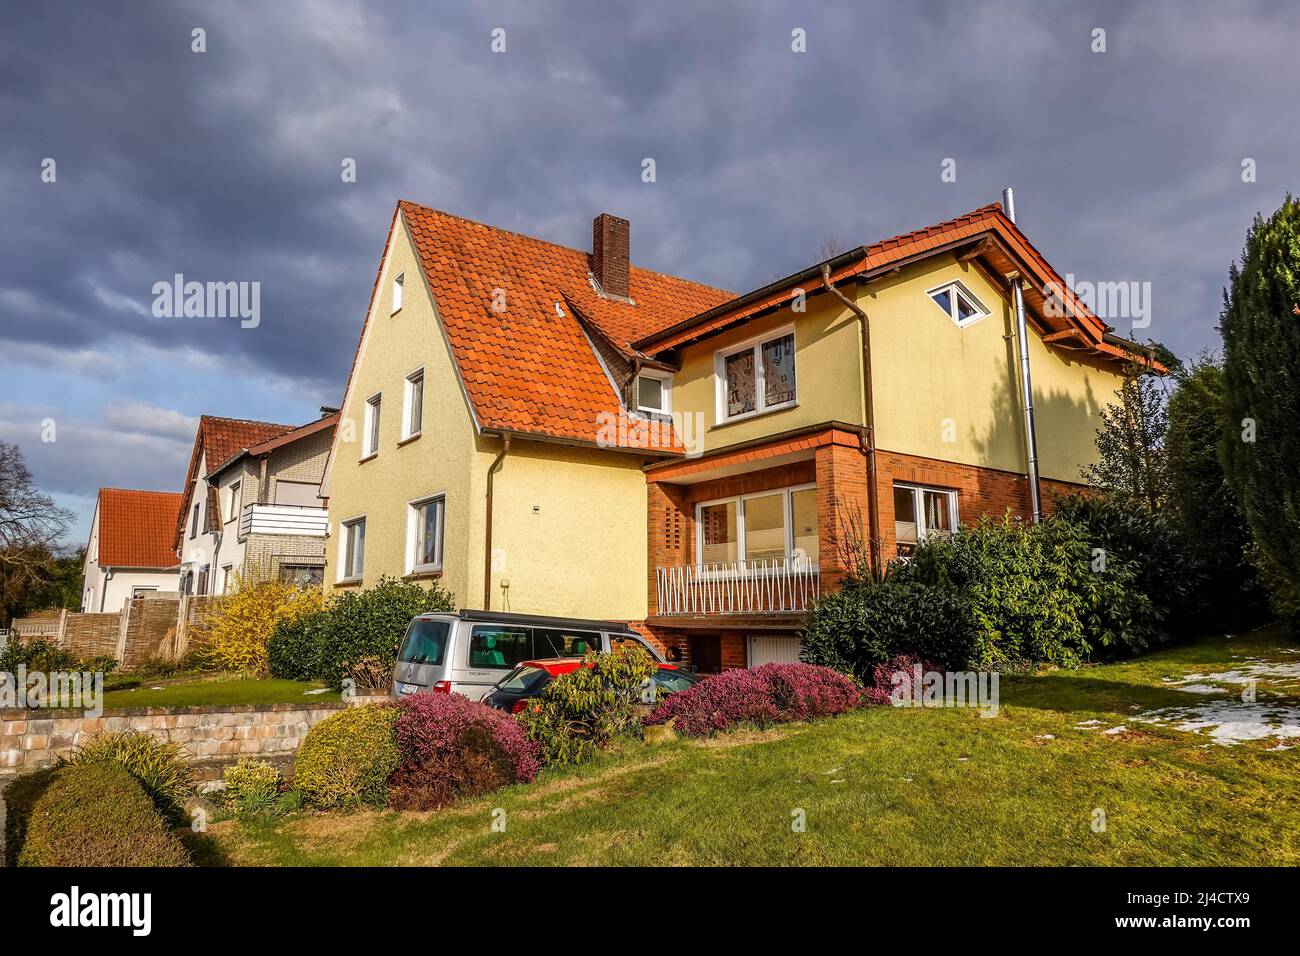 Residential house, Vlotho, North Rhine-Westphalia, Germany Stock Photo